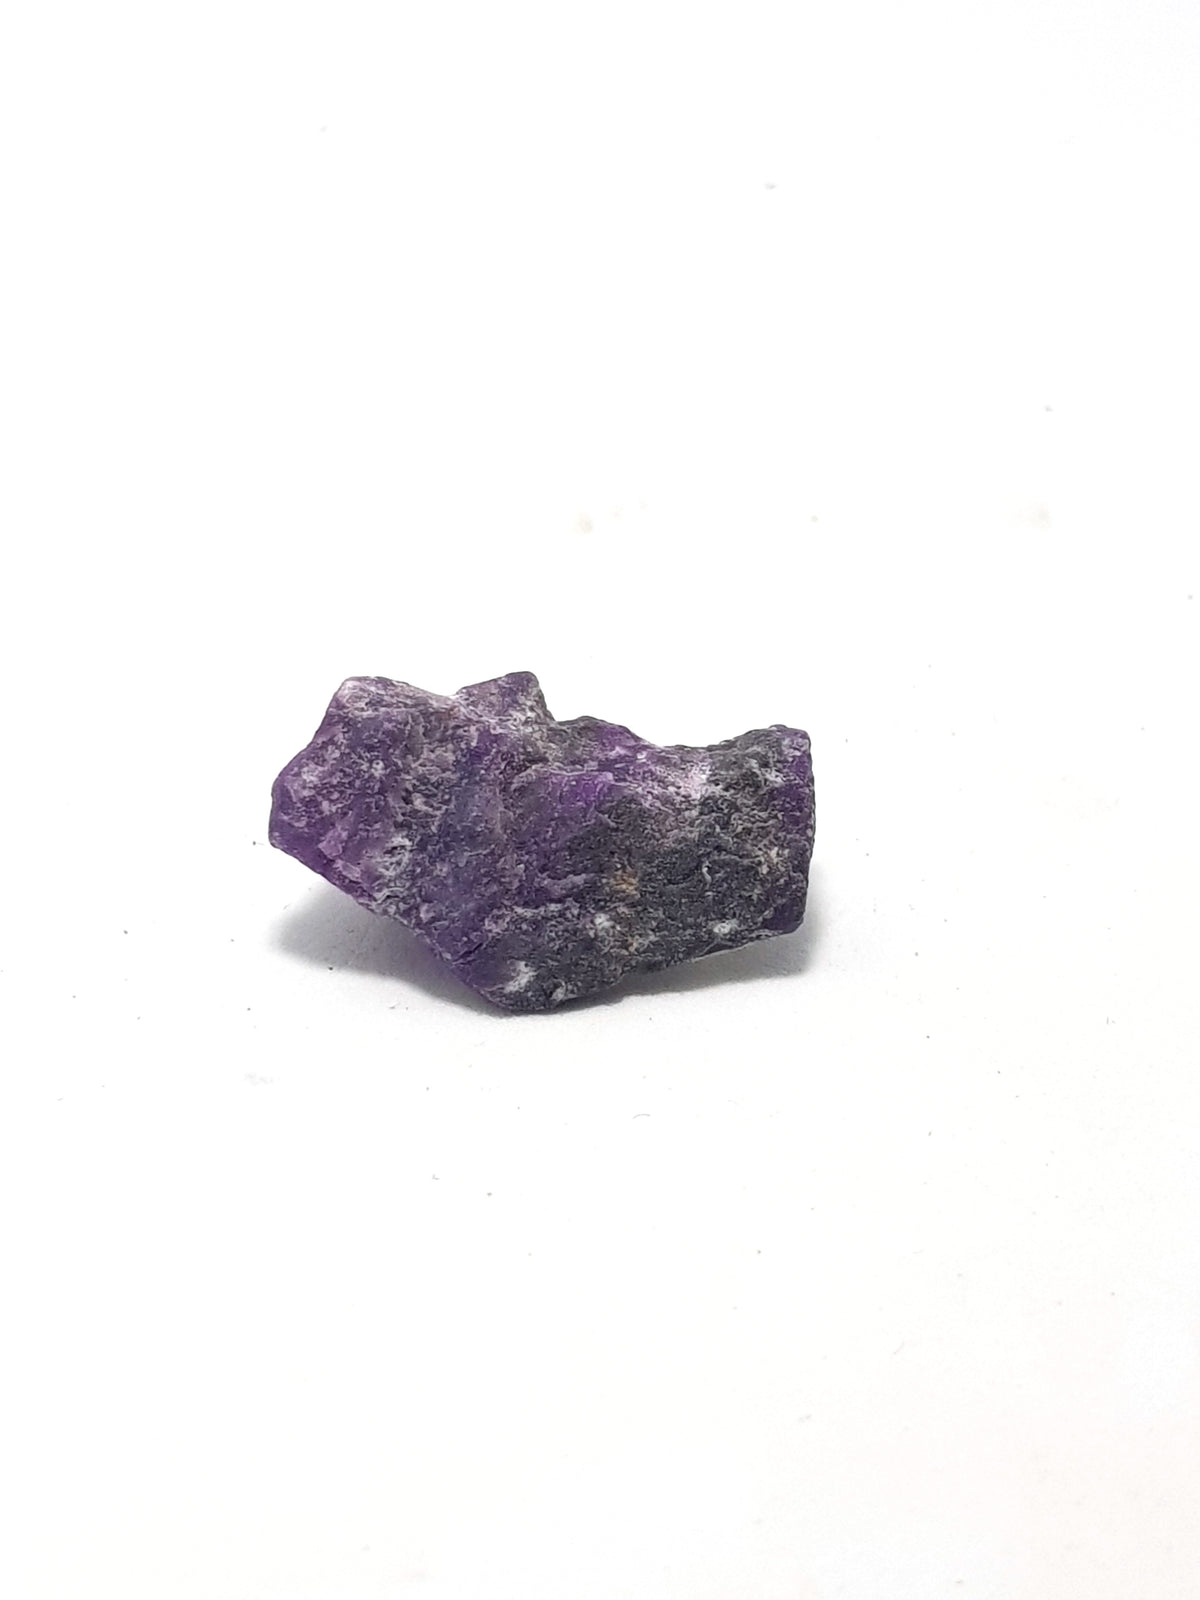 raw sugilite. very purple with a black matrix